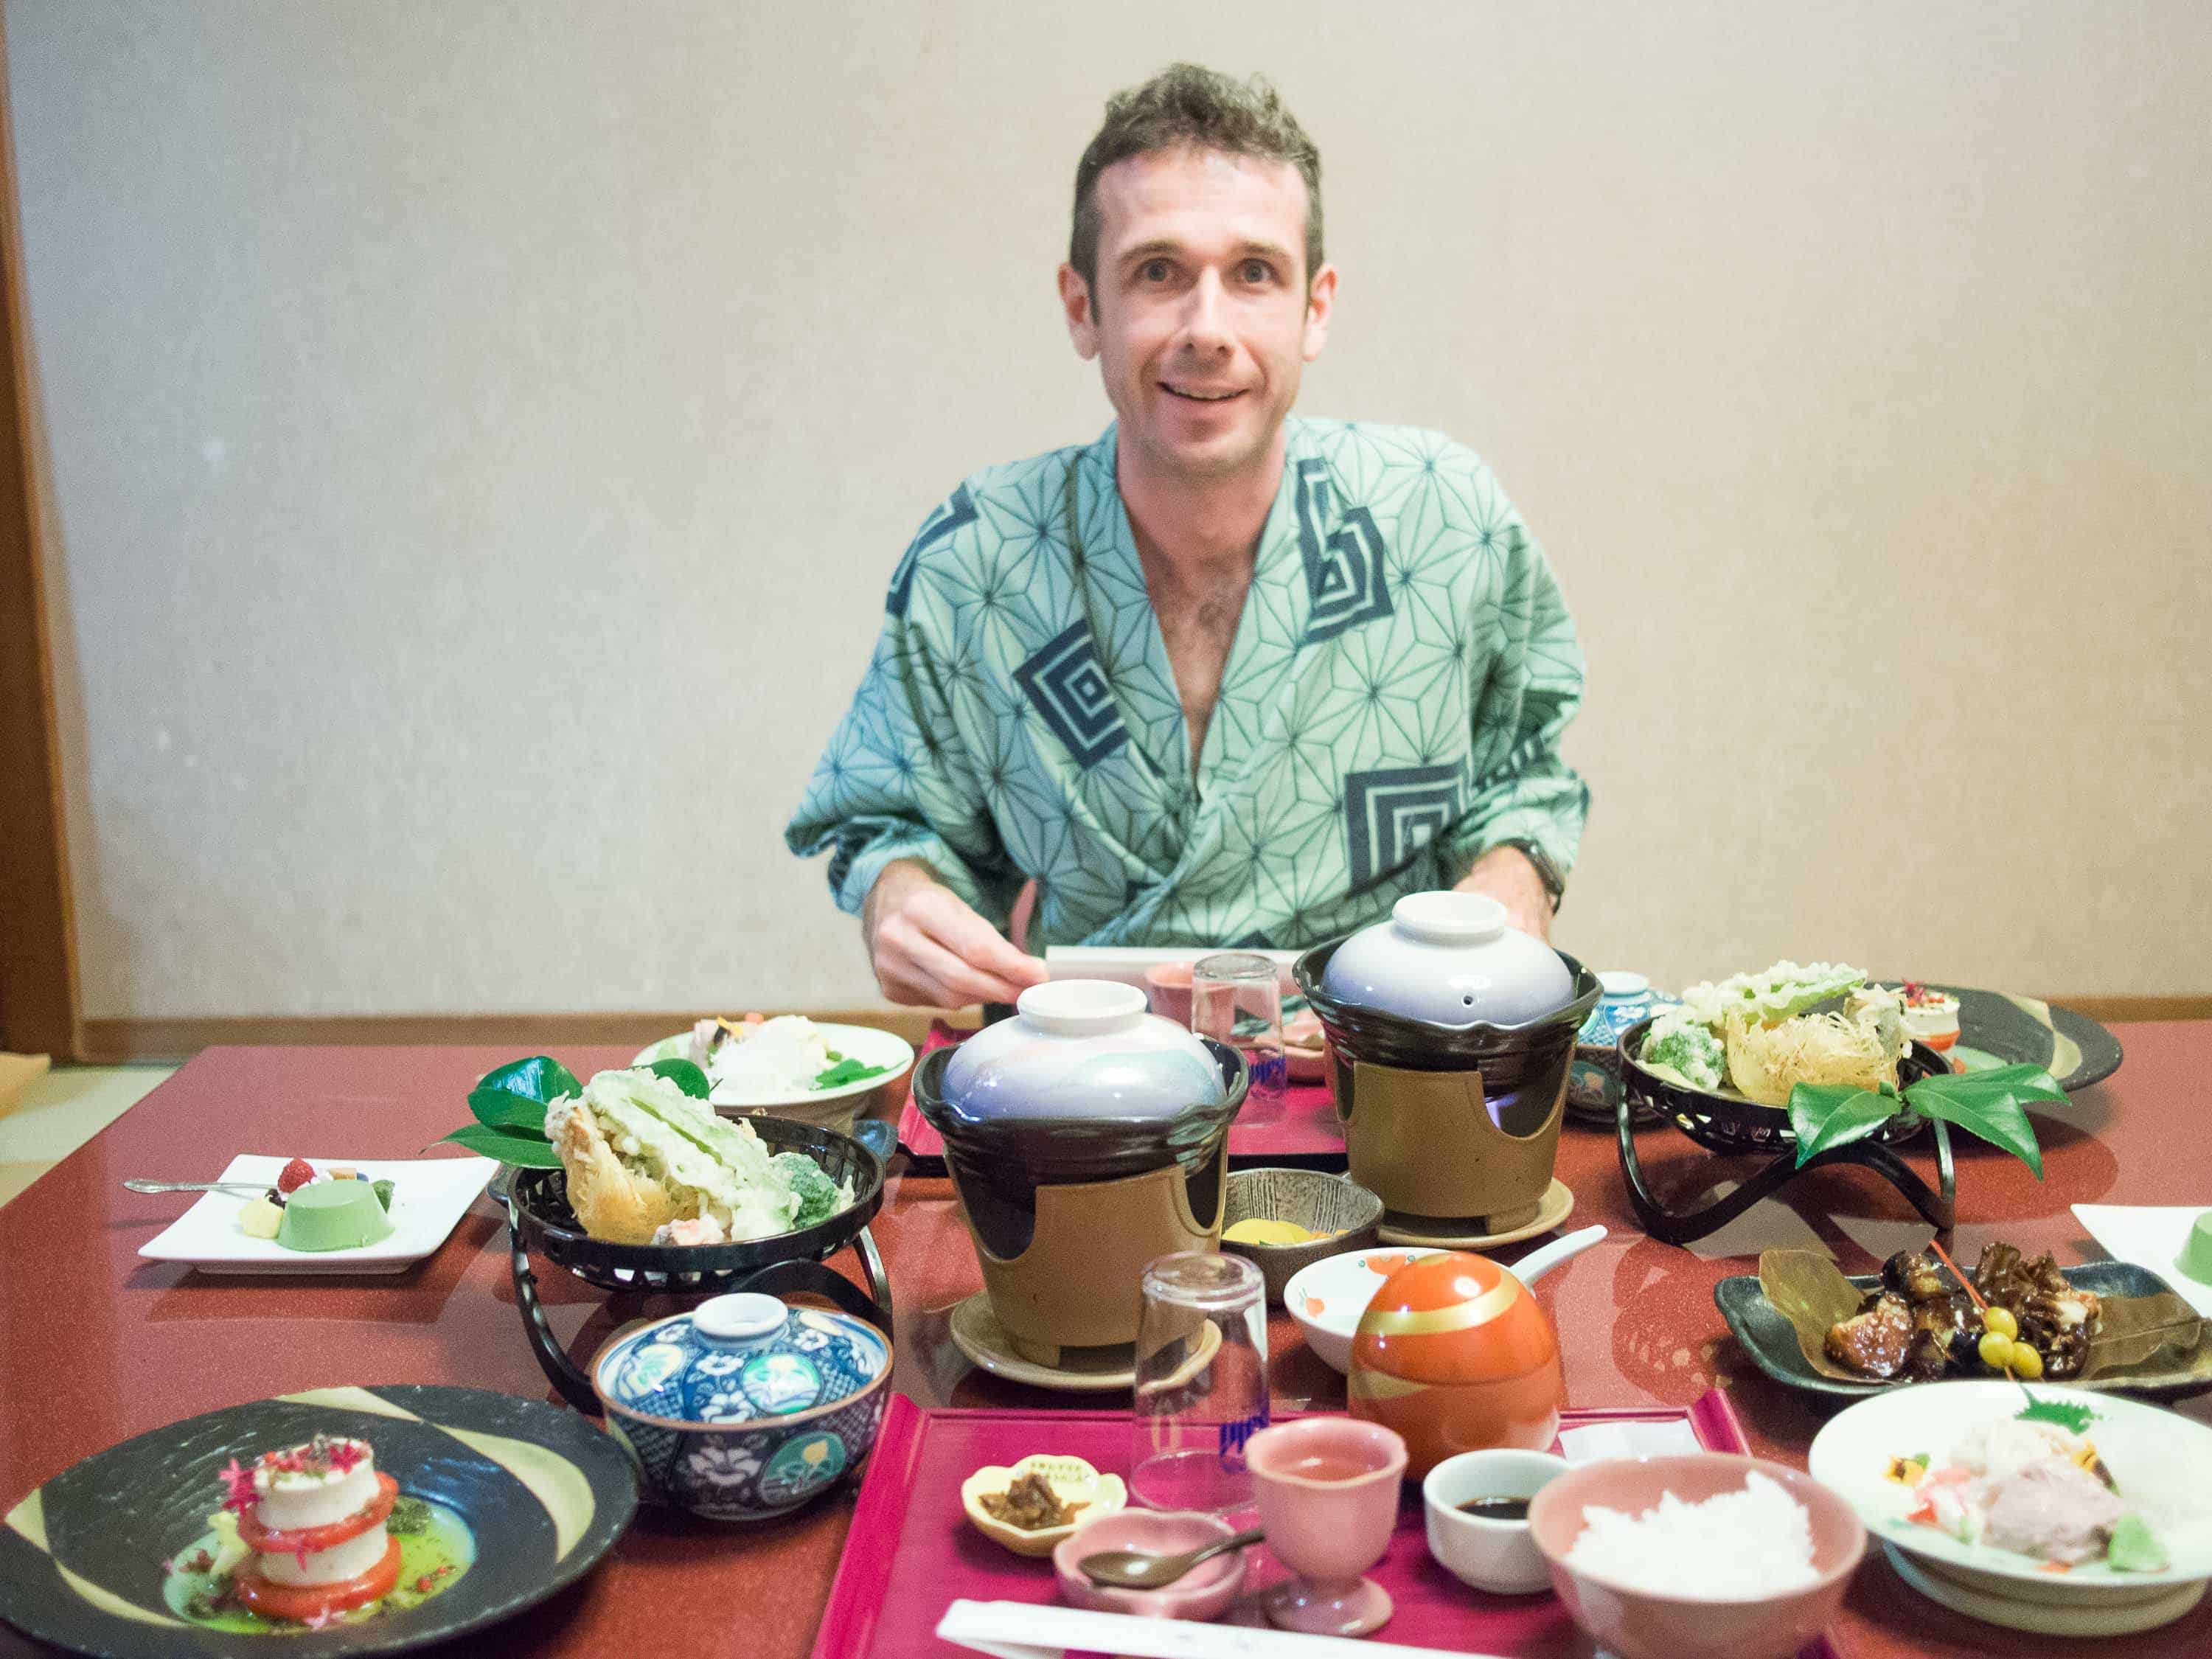 Simon wearing a yukata and enjoying our vegetarian feast in our ryokan room in Hakone